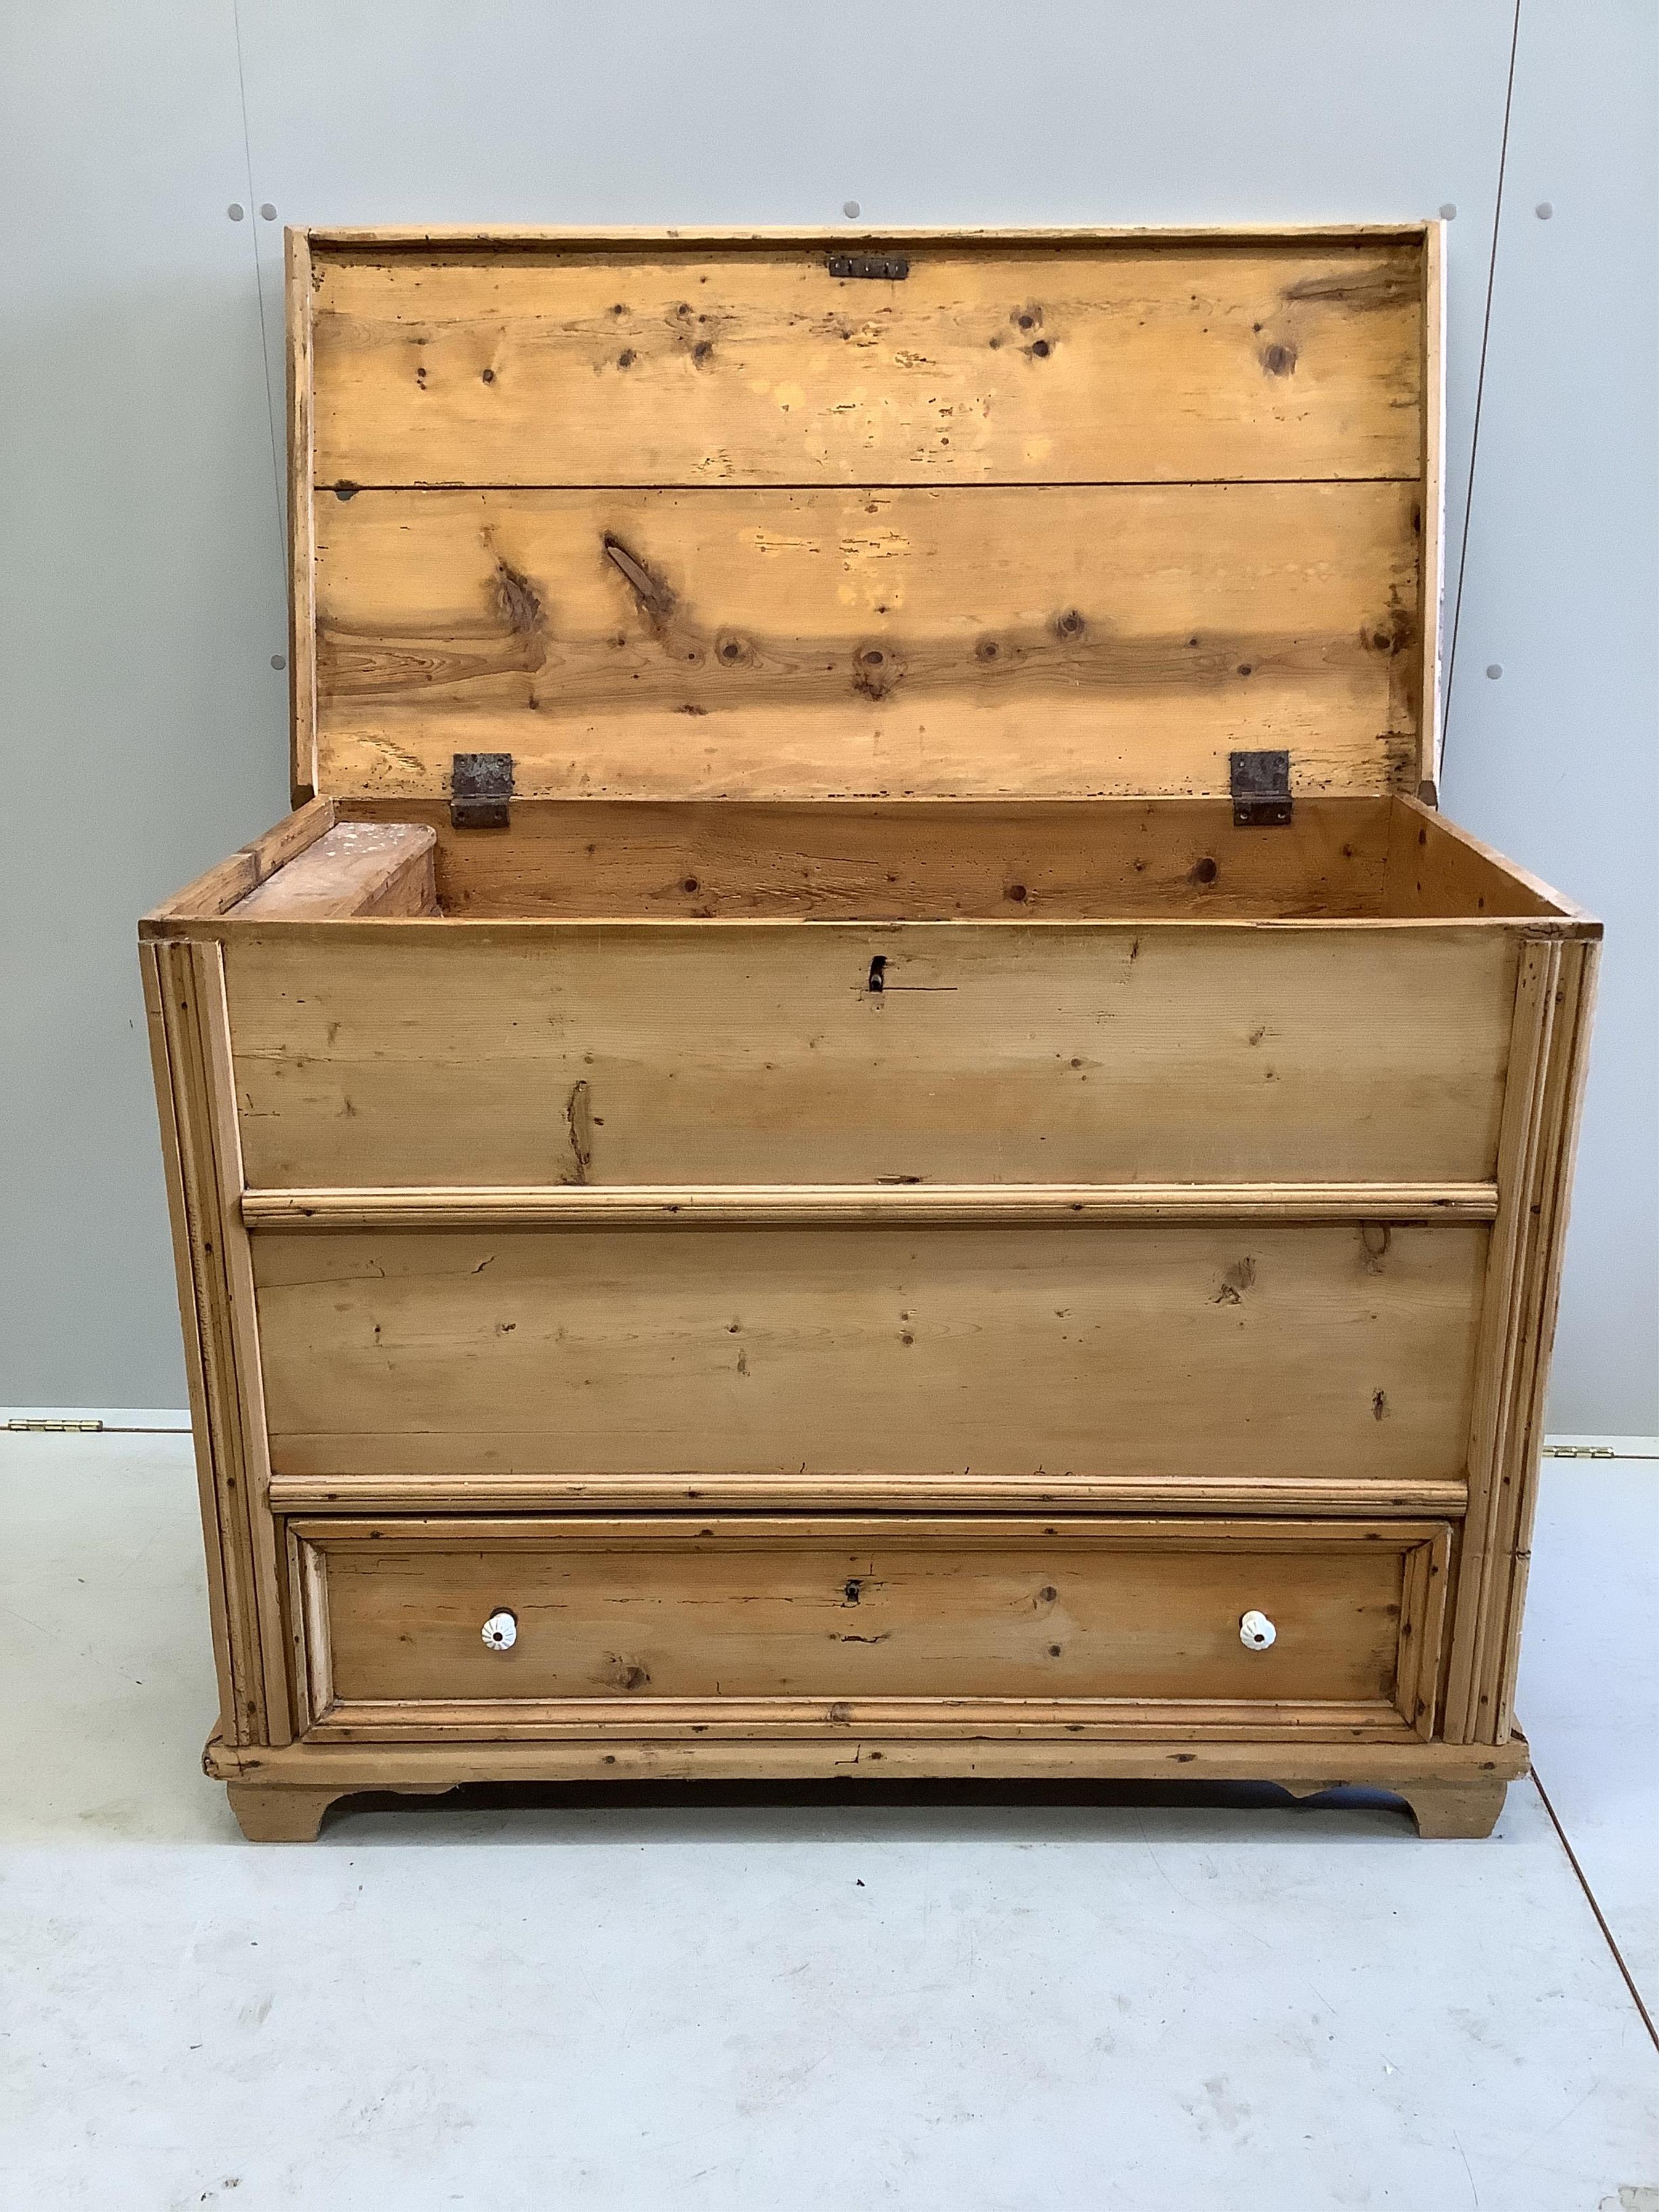 A 19th century Continental pine mule chest, width 112cm, depth 55cm, height 81cm. Condition - fair